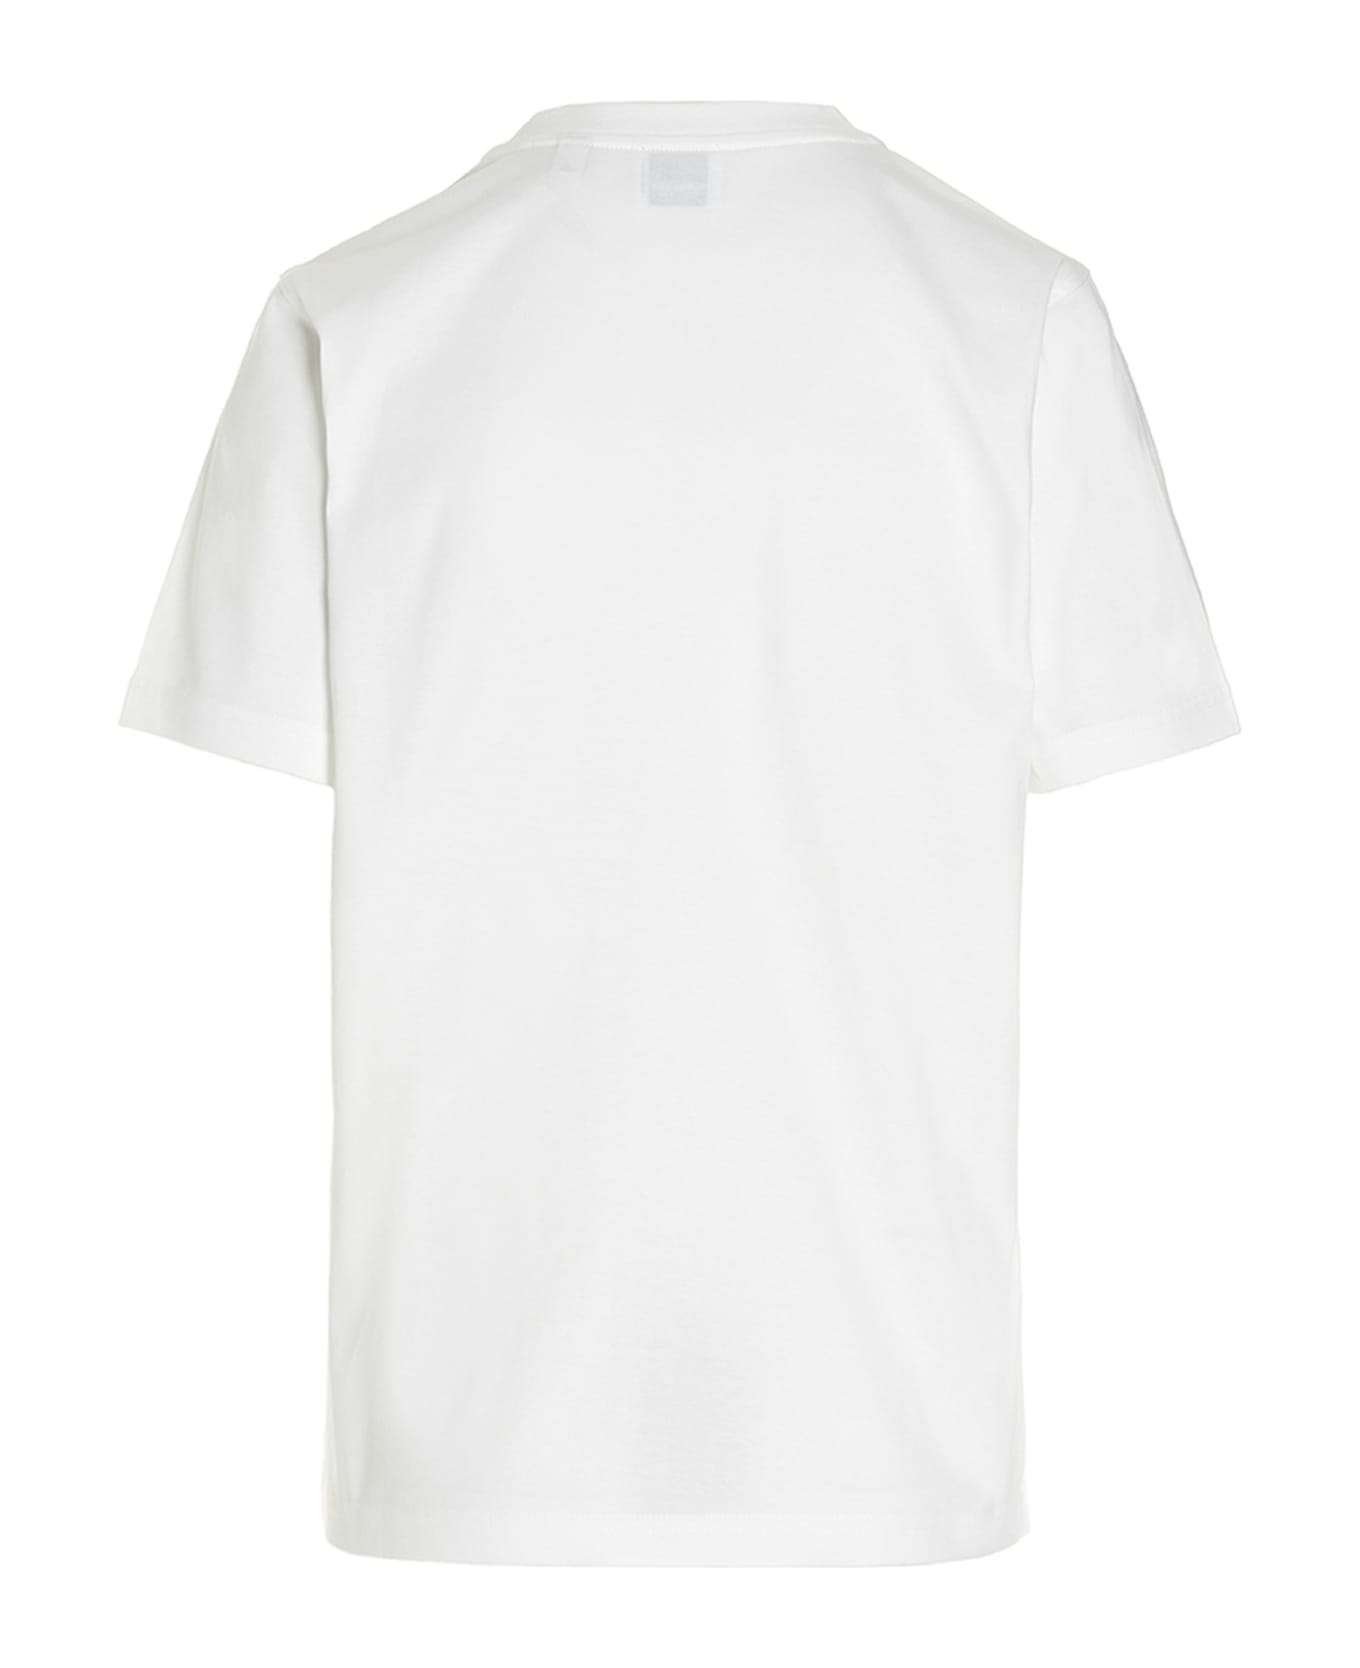 Burberry Logo T-shirt - White Tシャツ